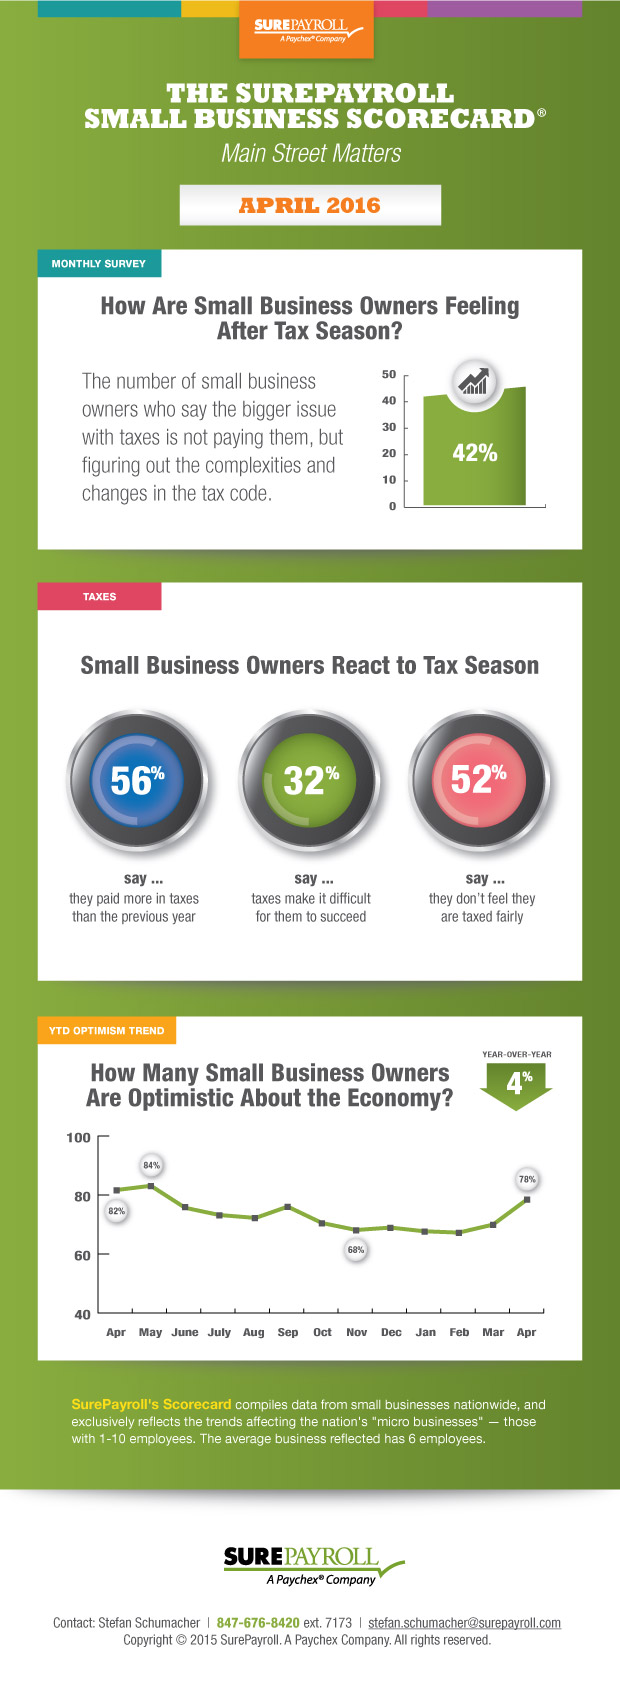 The SurePayroll Small Business Scorecard